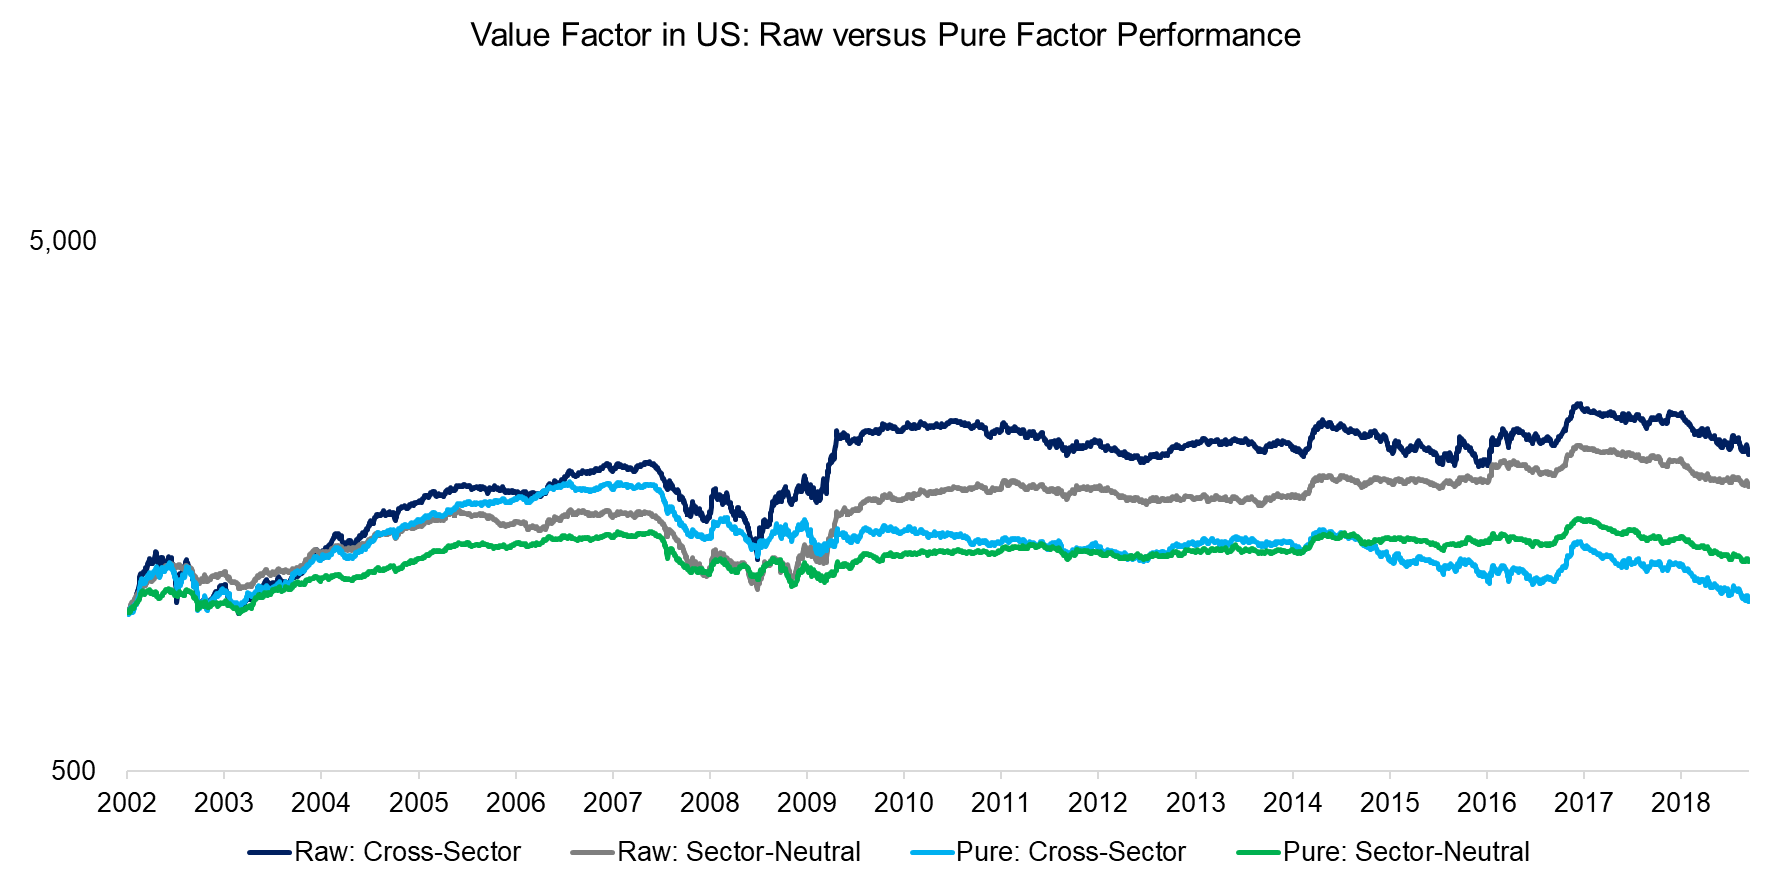 Value Factor in US Raw versus Pure Factor Performance